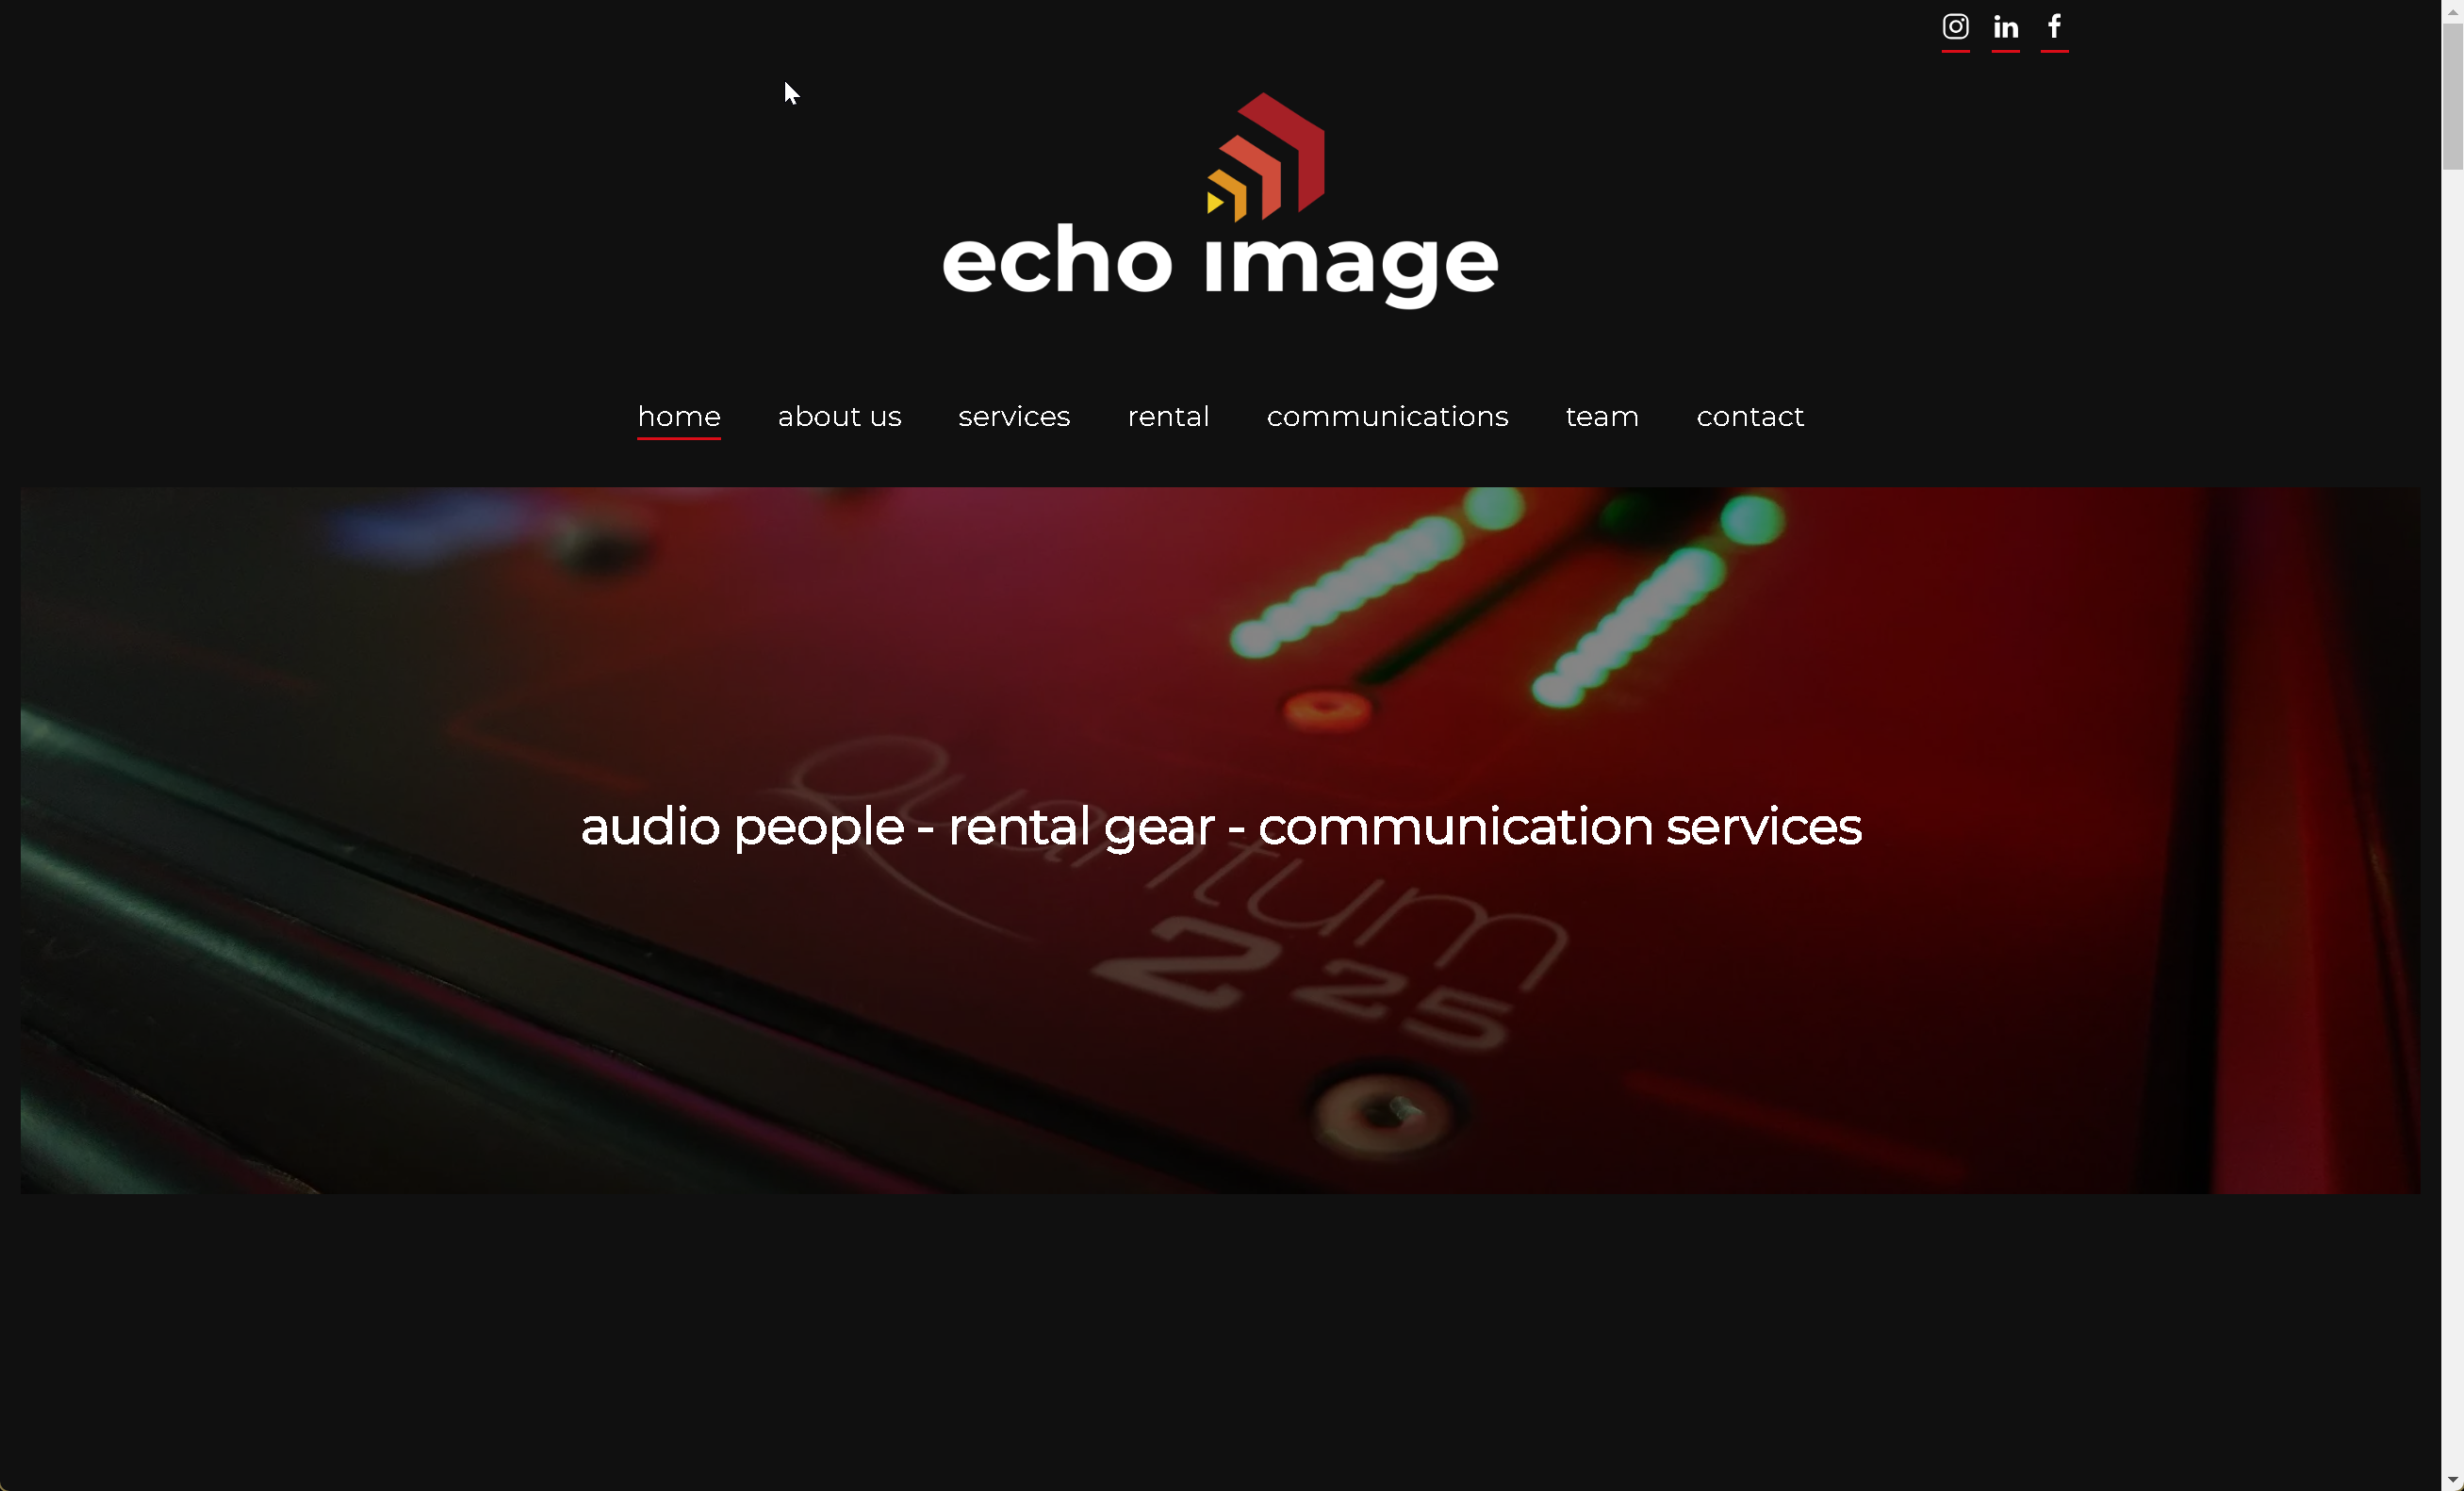 Webseite "Echo Image"